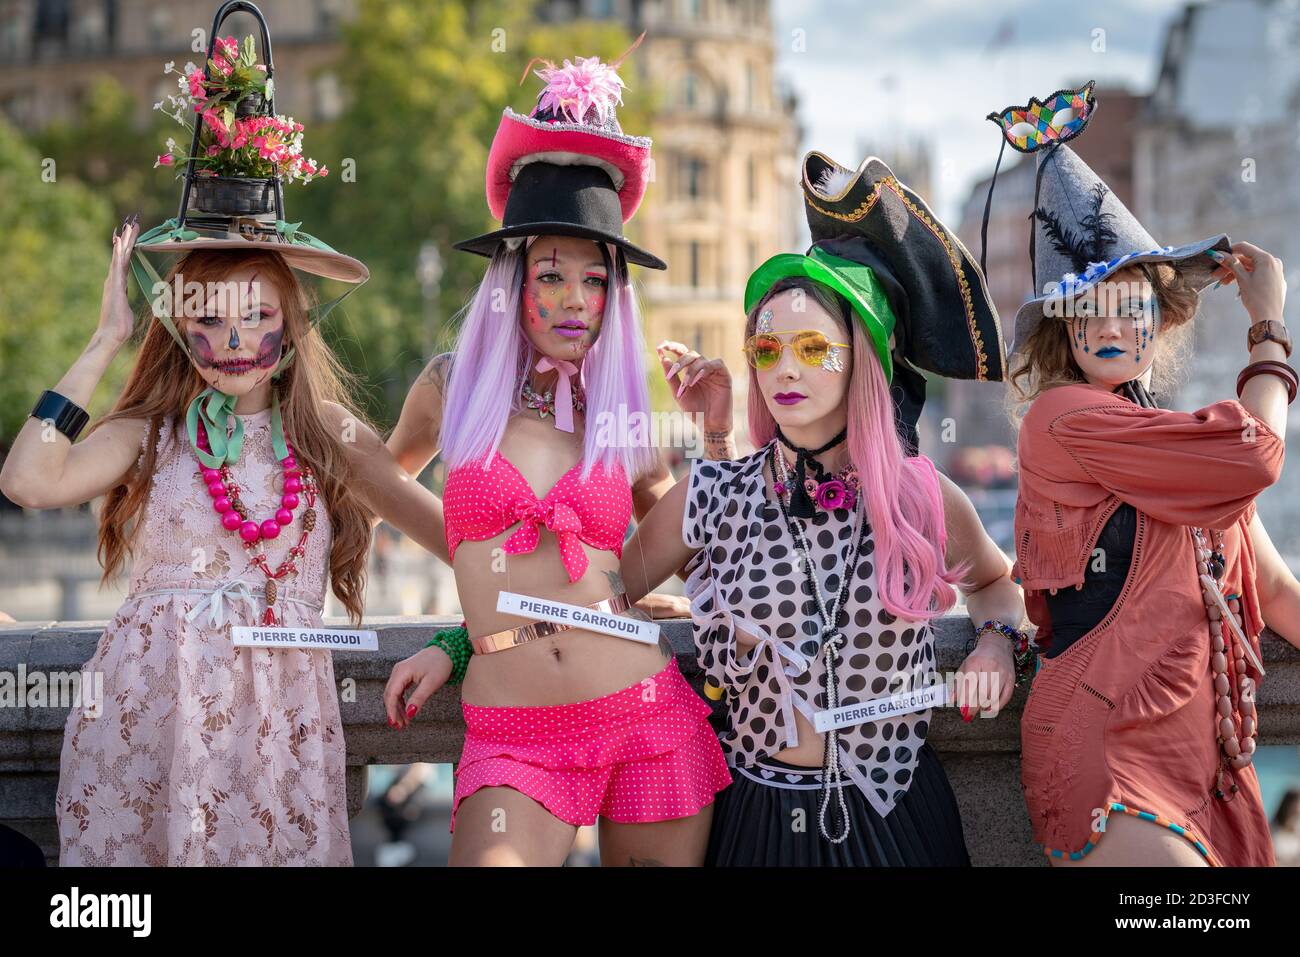 Models take part in a colourful flashmob street fashion show in Trafalgar Square for designer Pierre Garroudi. London, UK. Stock Photo